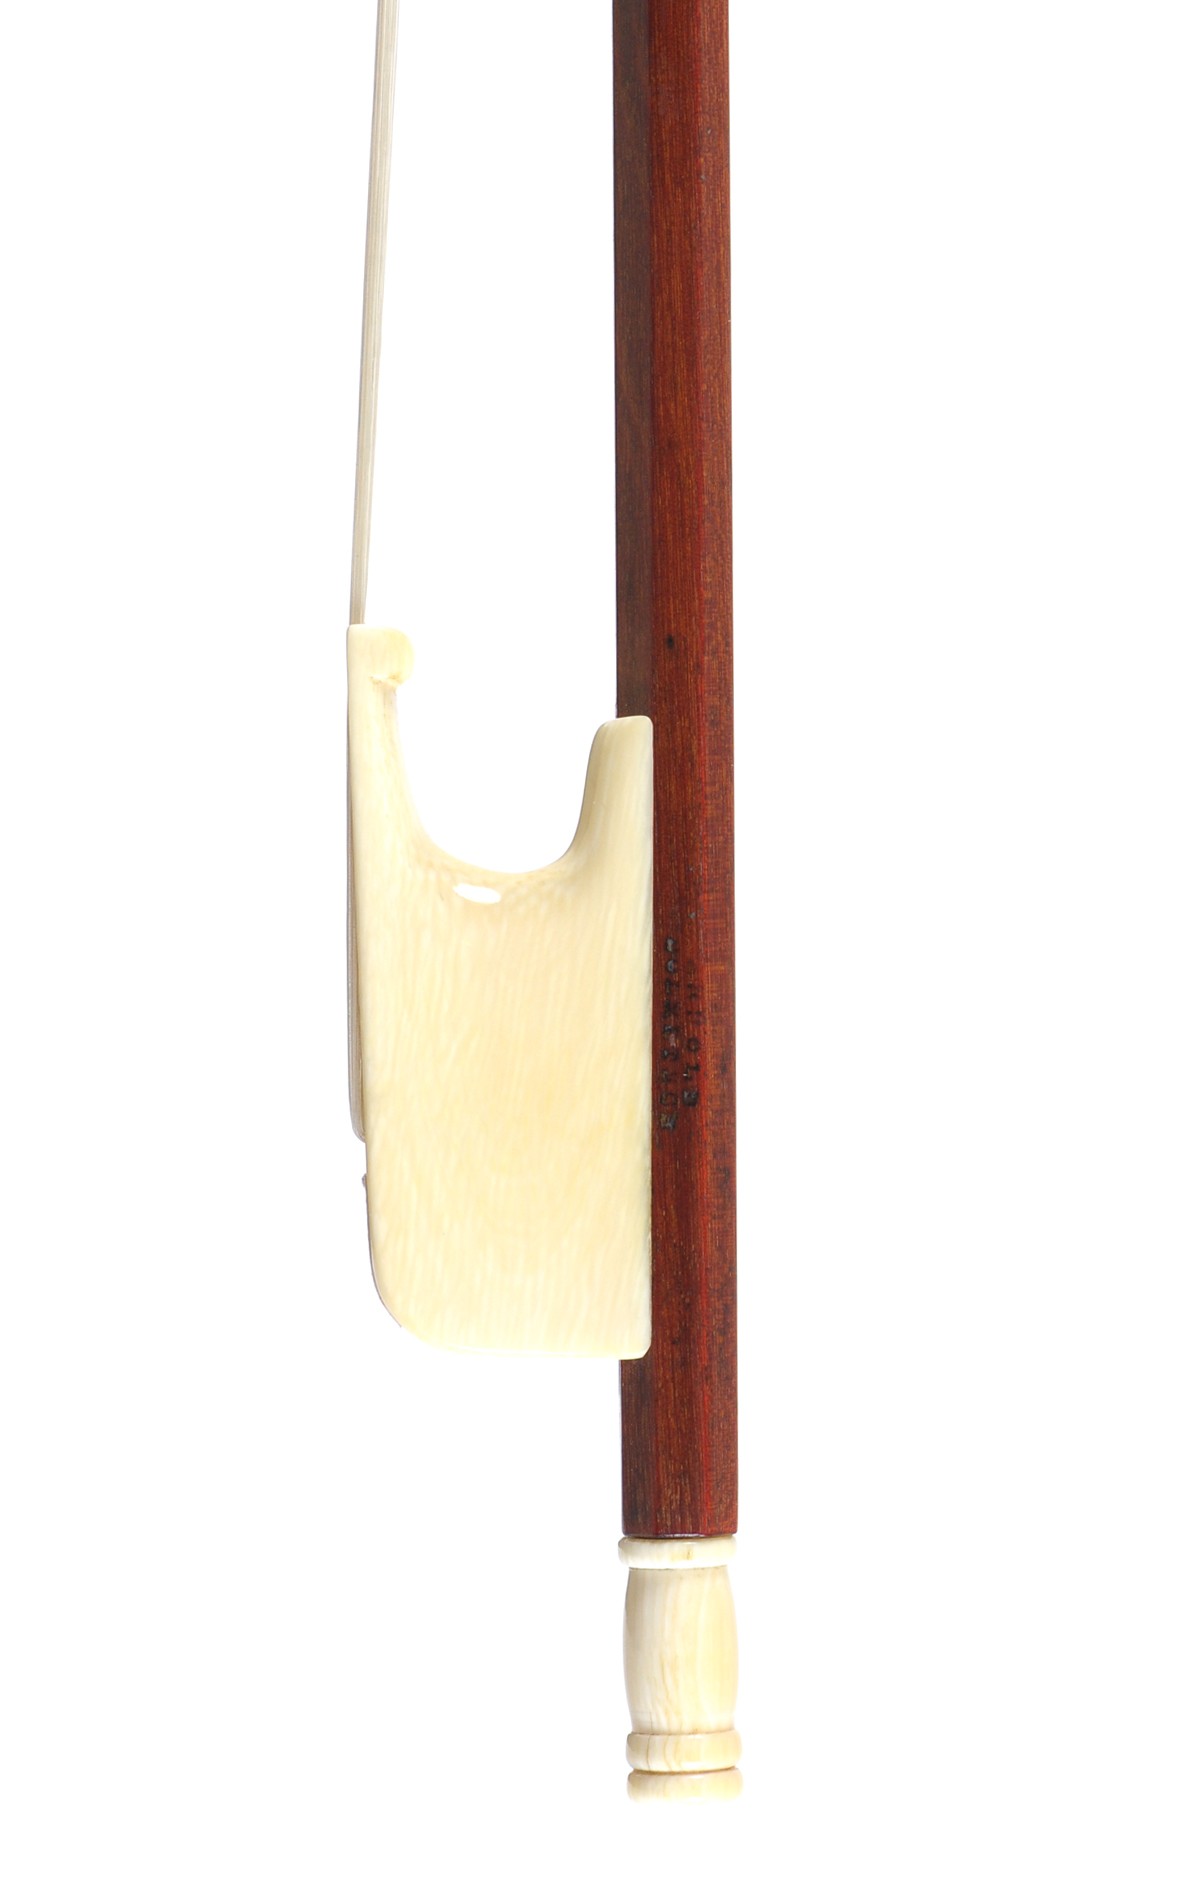 Viola da gamba bow by Arnold Dolmetsch - tip